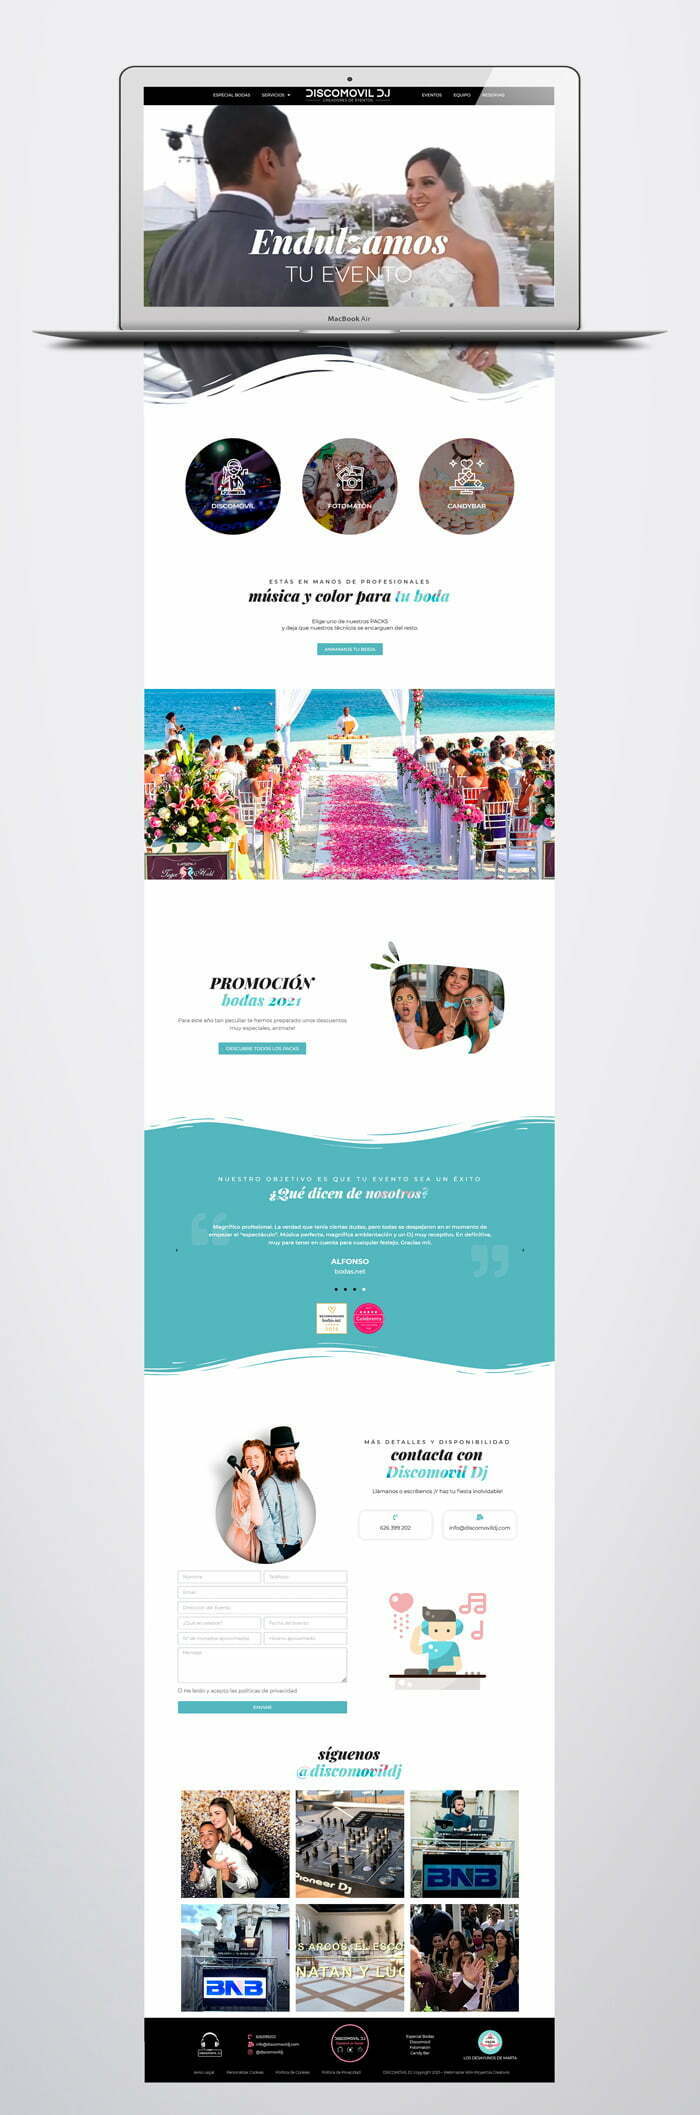 diseño-pagina-web-bodas